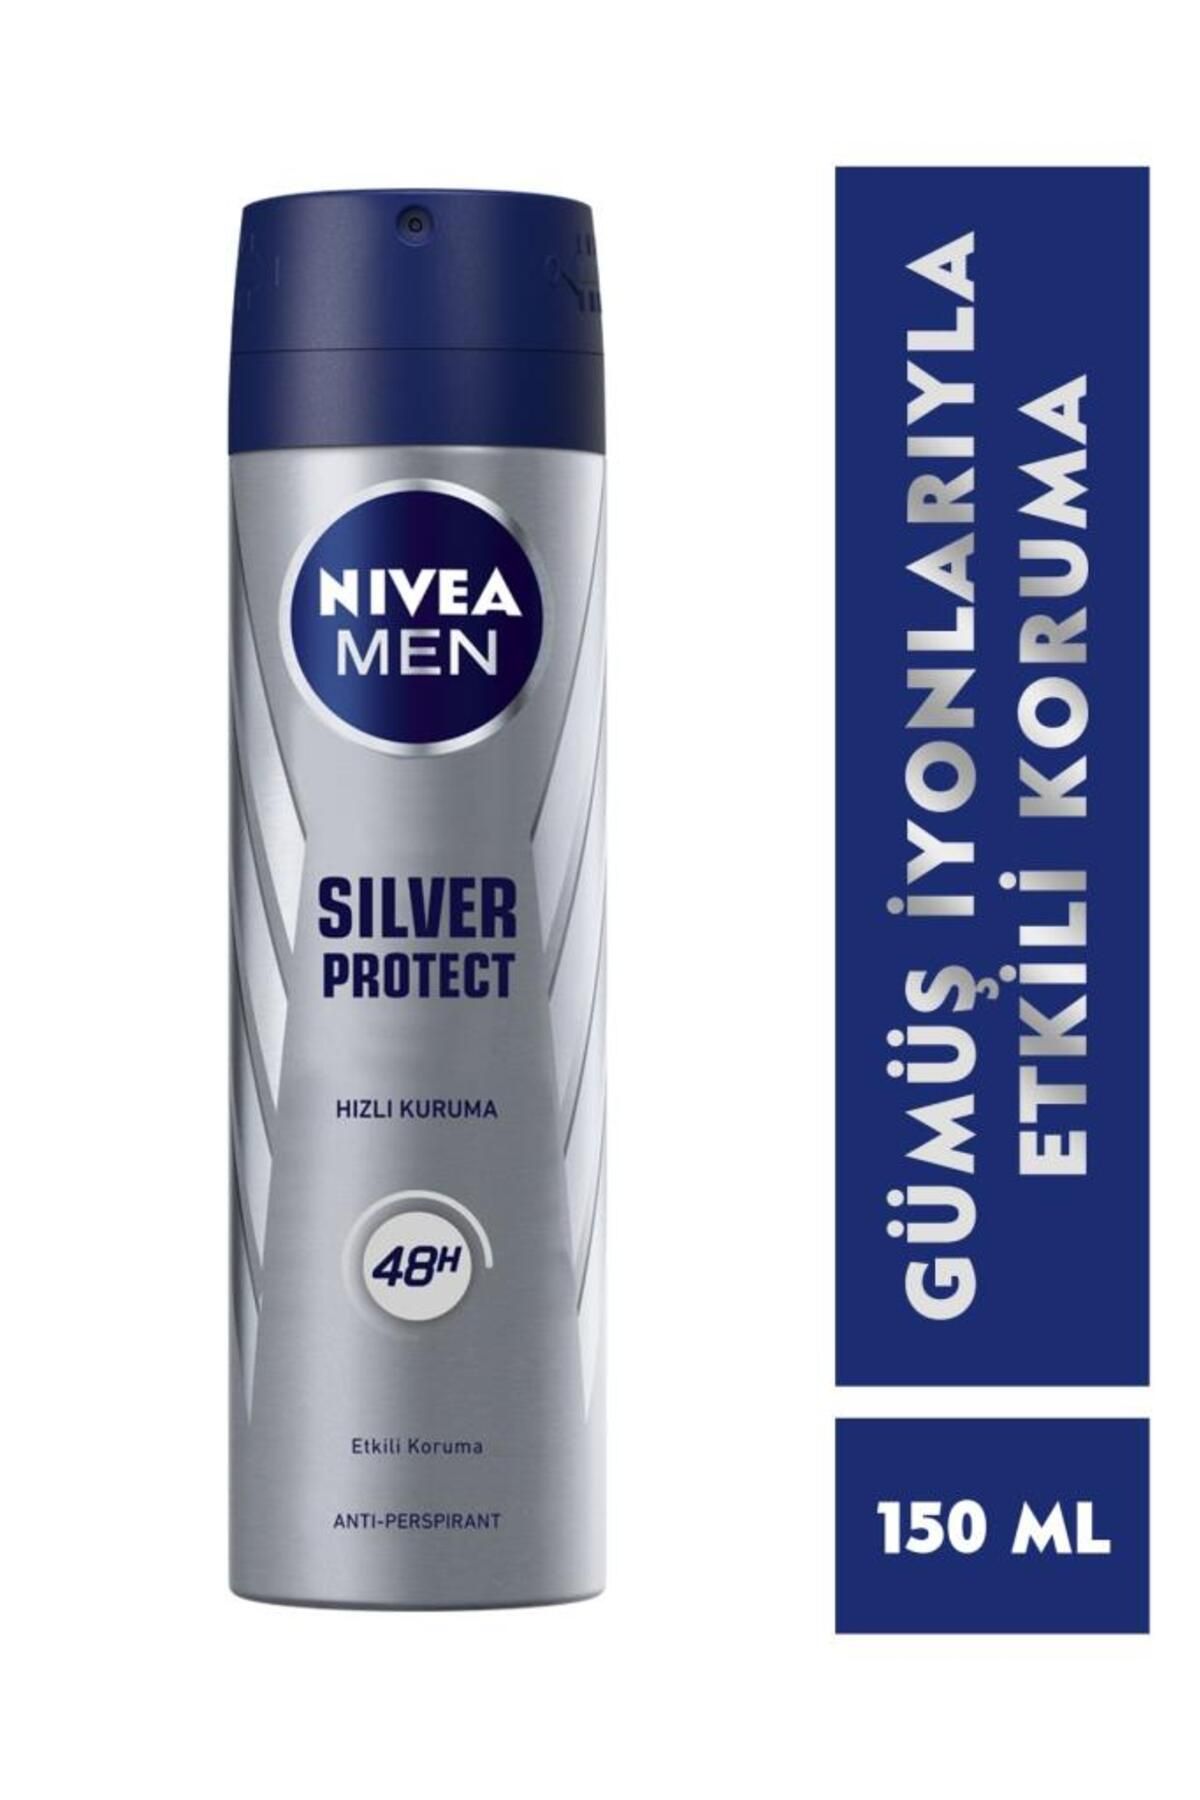 NIVEA MEN Erkek Sprey Deodorant Silver Protect 150 ml,48 Saat Anti-Perspirant Koruma, Hızlı Kuruma